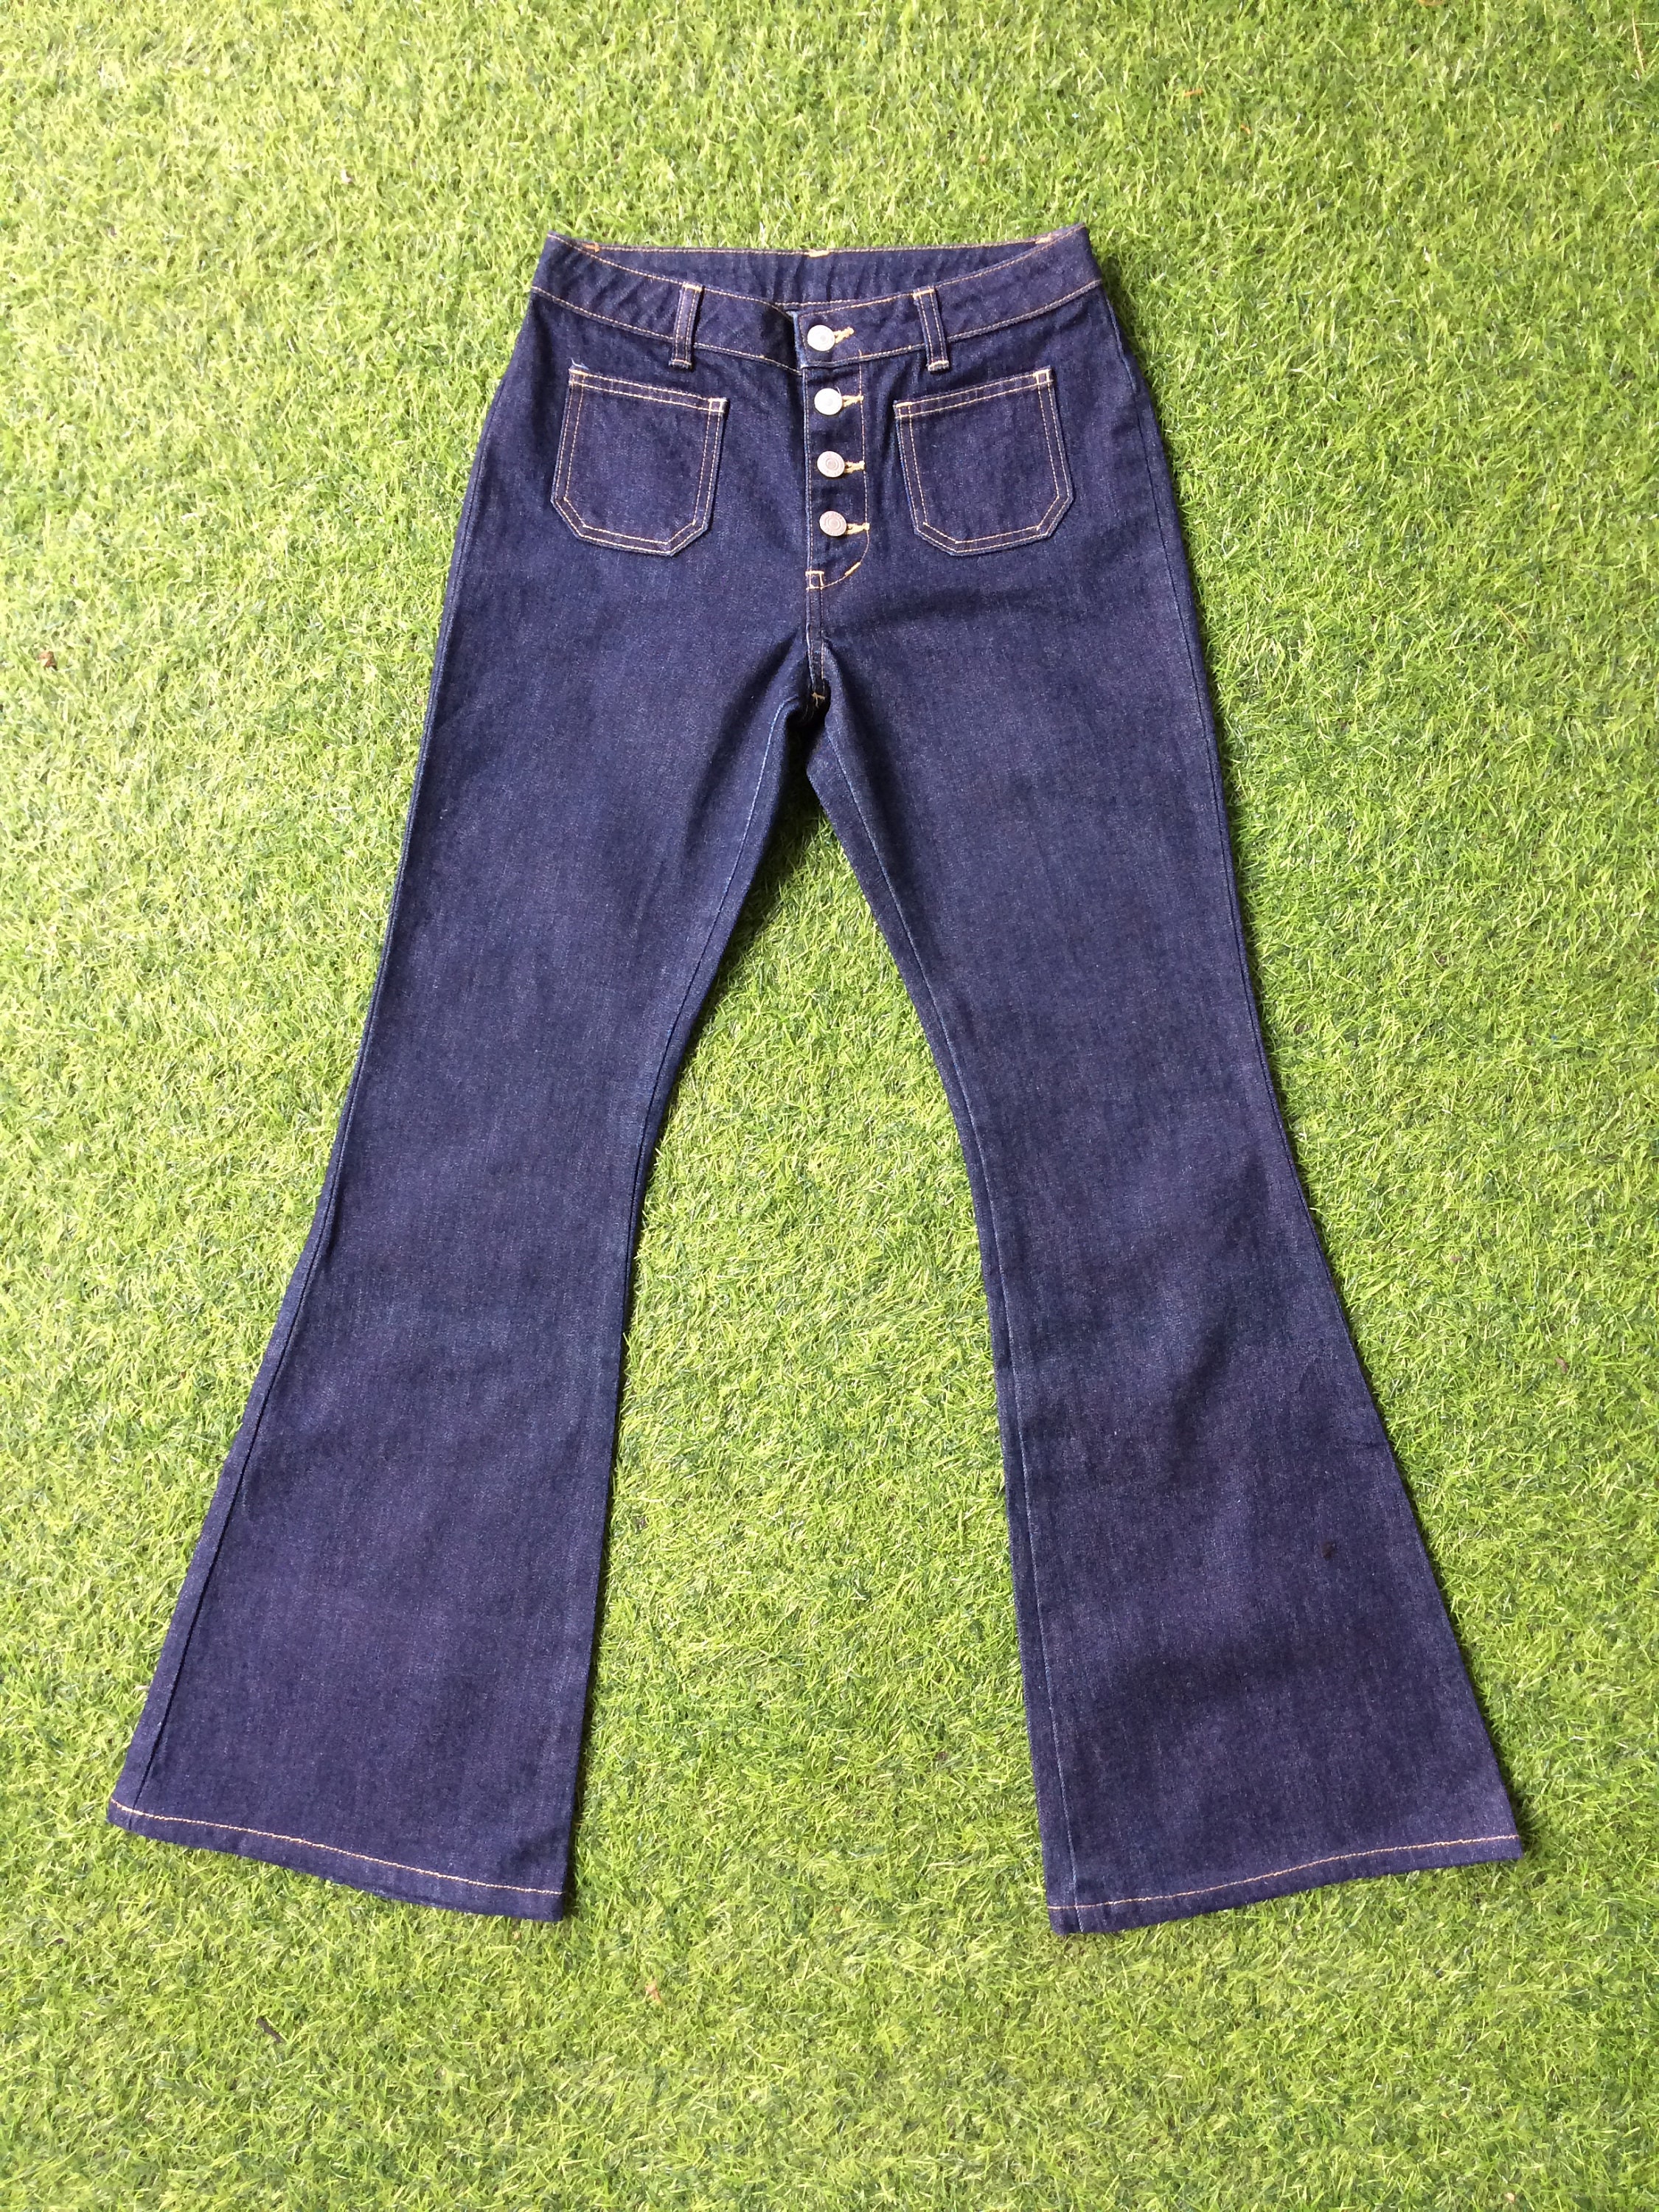 BackyardFashion Size 26 Vintage Sailor Jeans Wide Leg Jeans W26 L30 Exposed Button Fly Sailor Jean Dark Wash Denim Jeans Made in Japan Waist 26